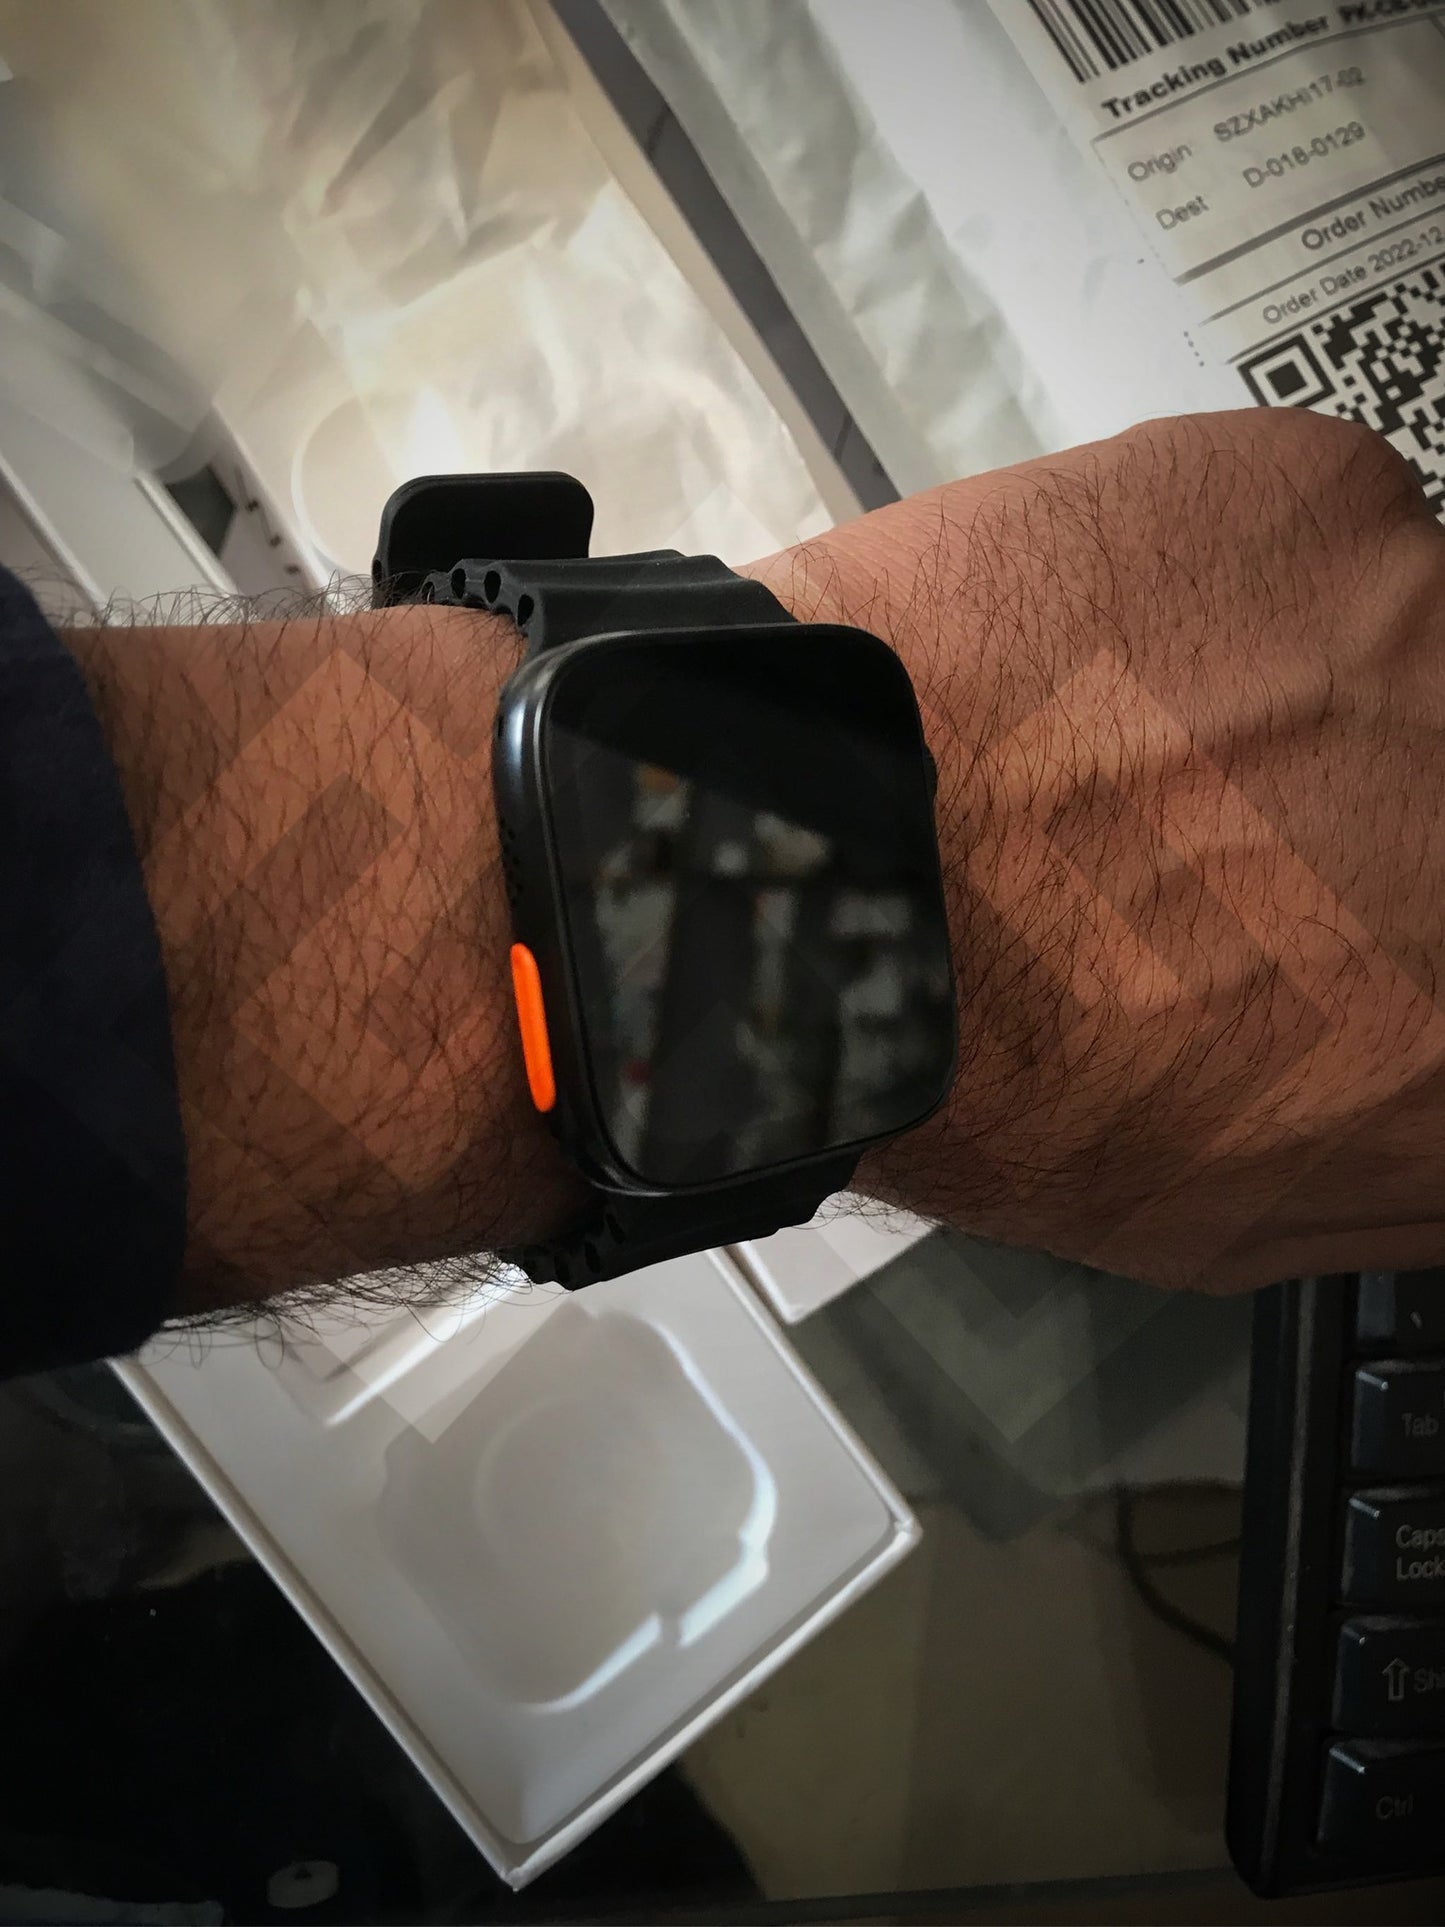 KD99 Ultra Smart Watch Series 8